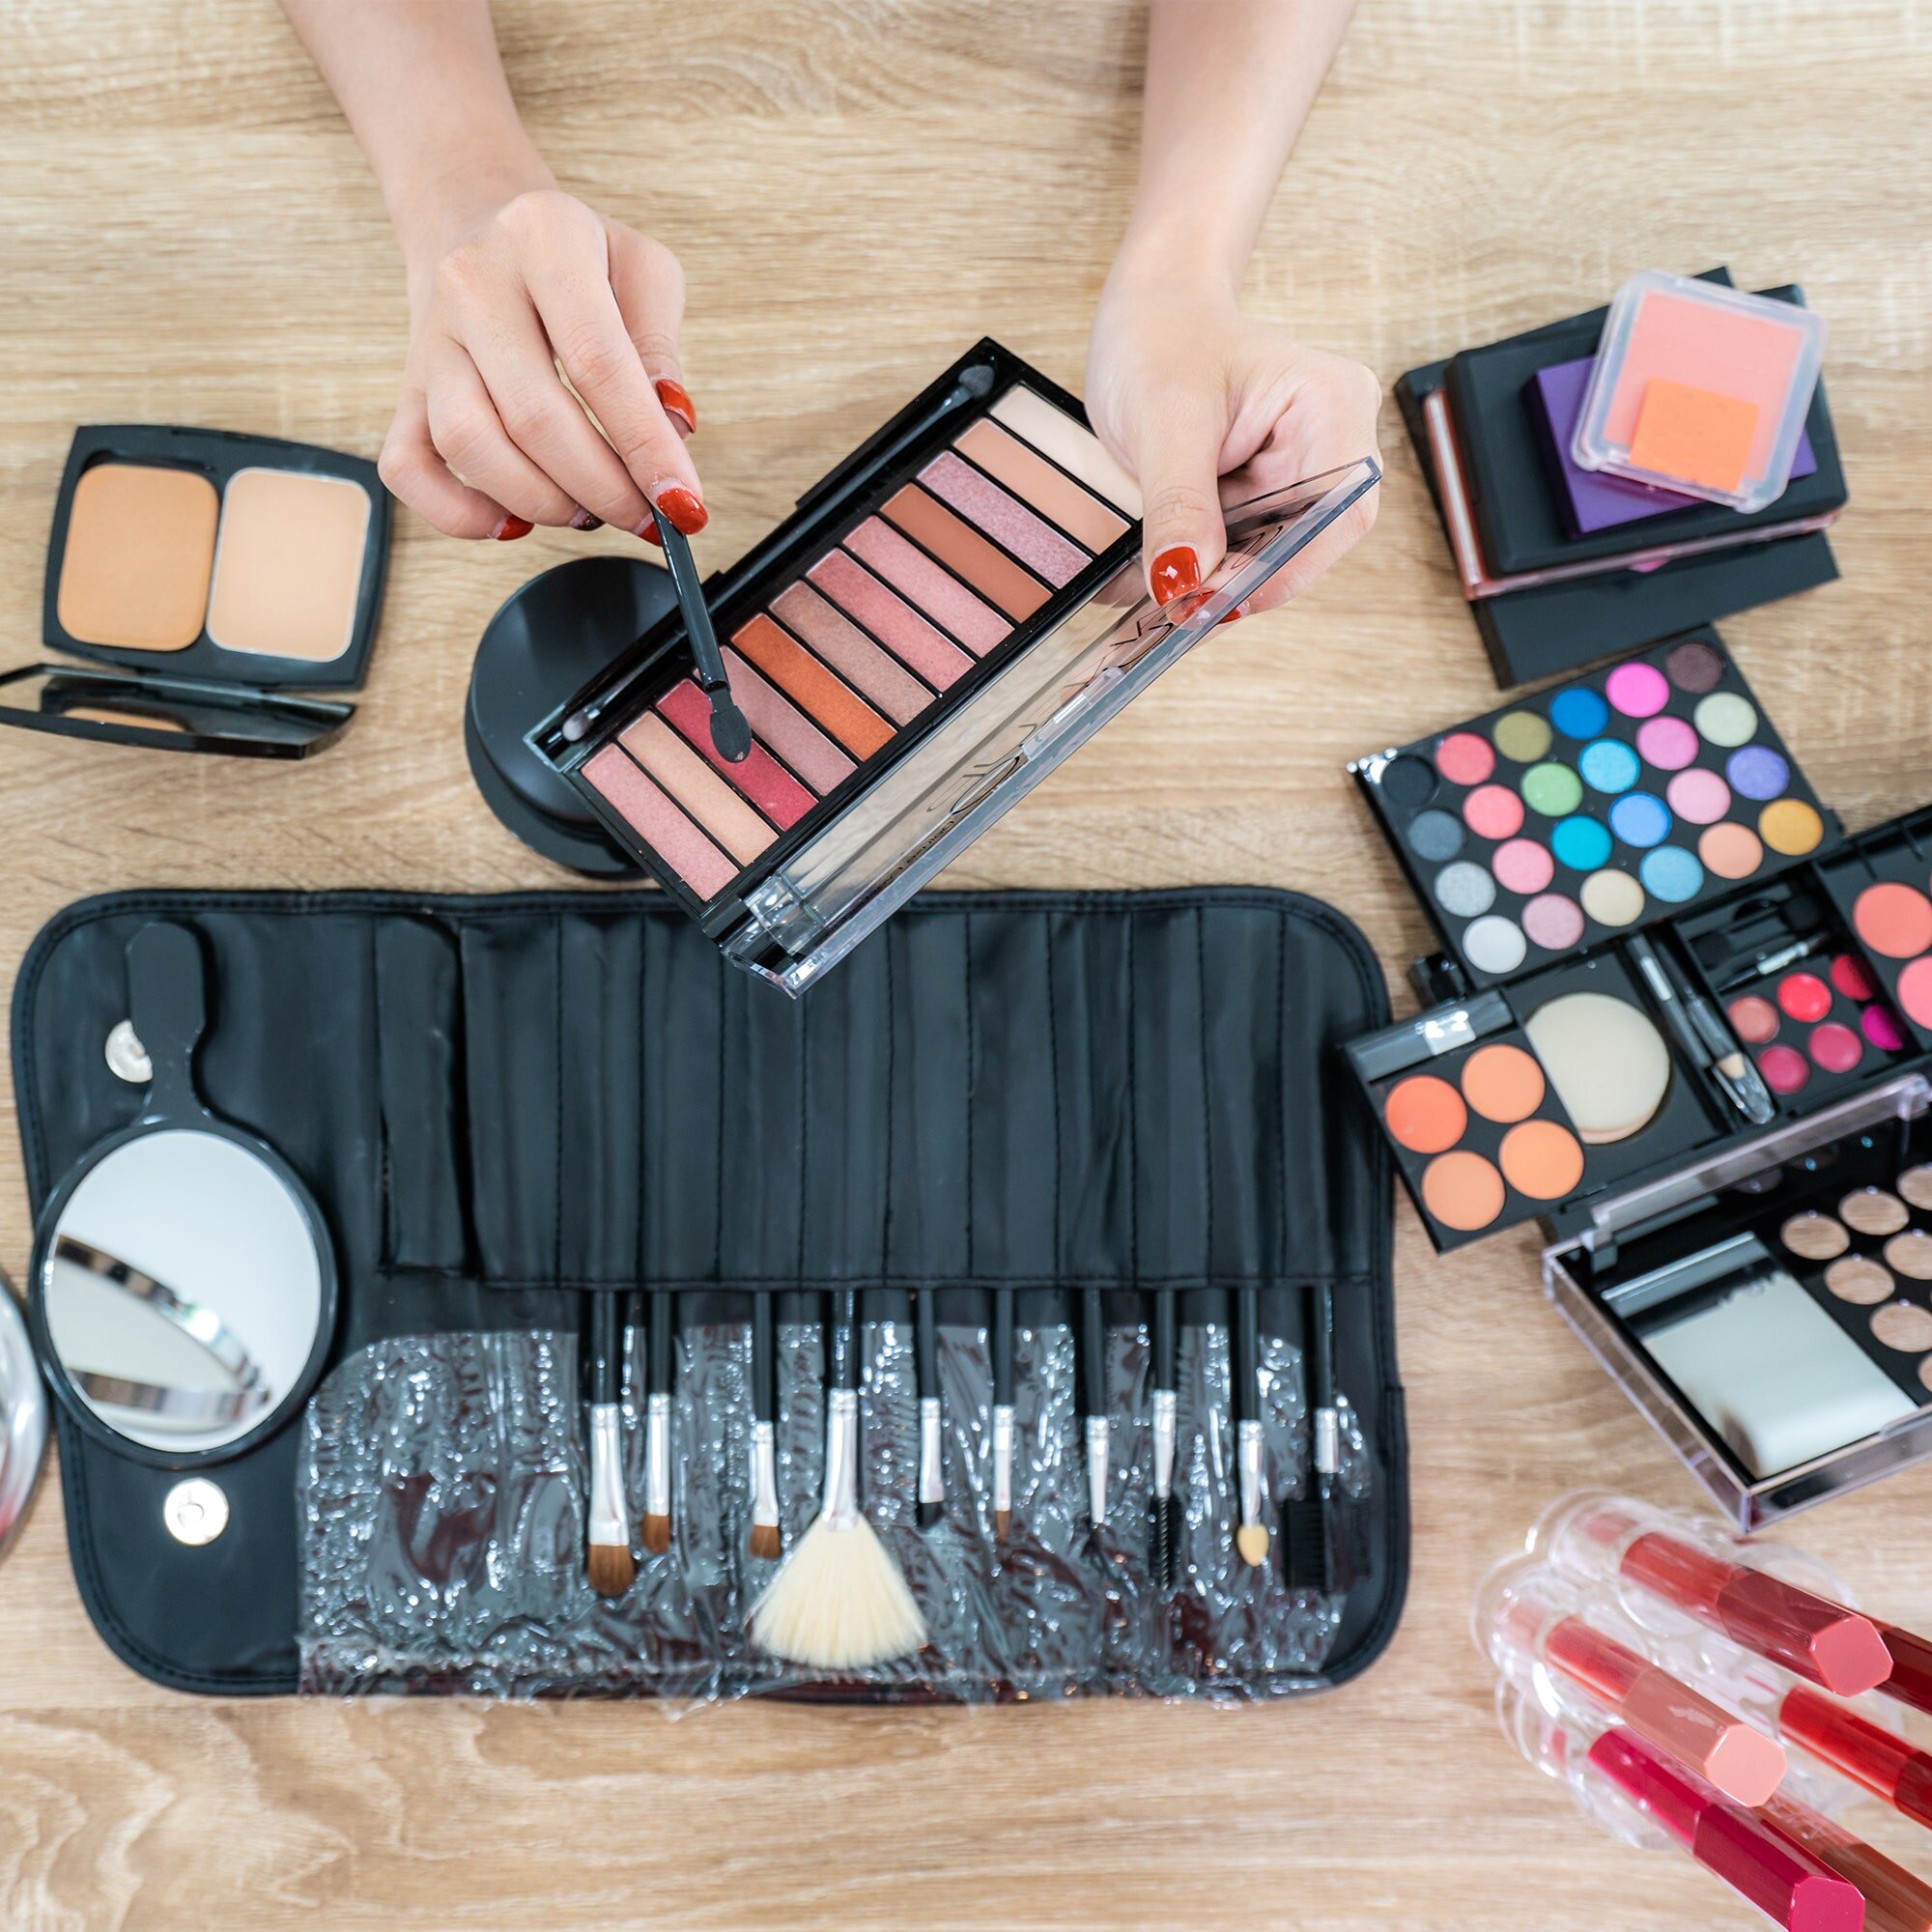 Your Makeup Kit Chronicles